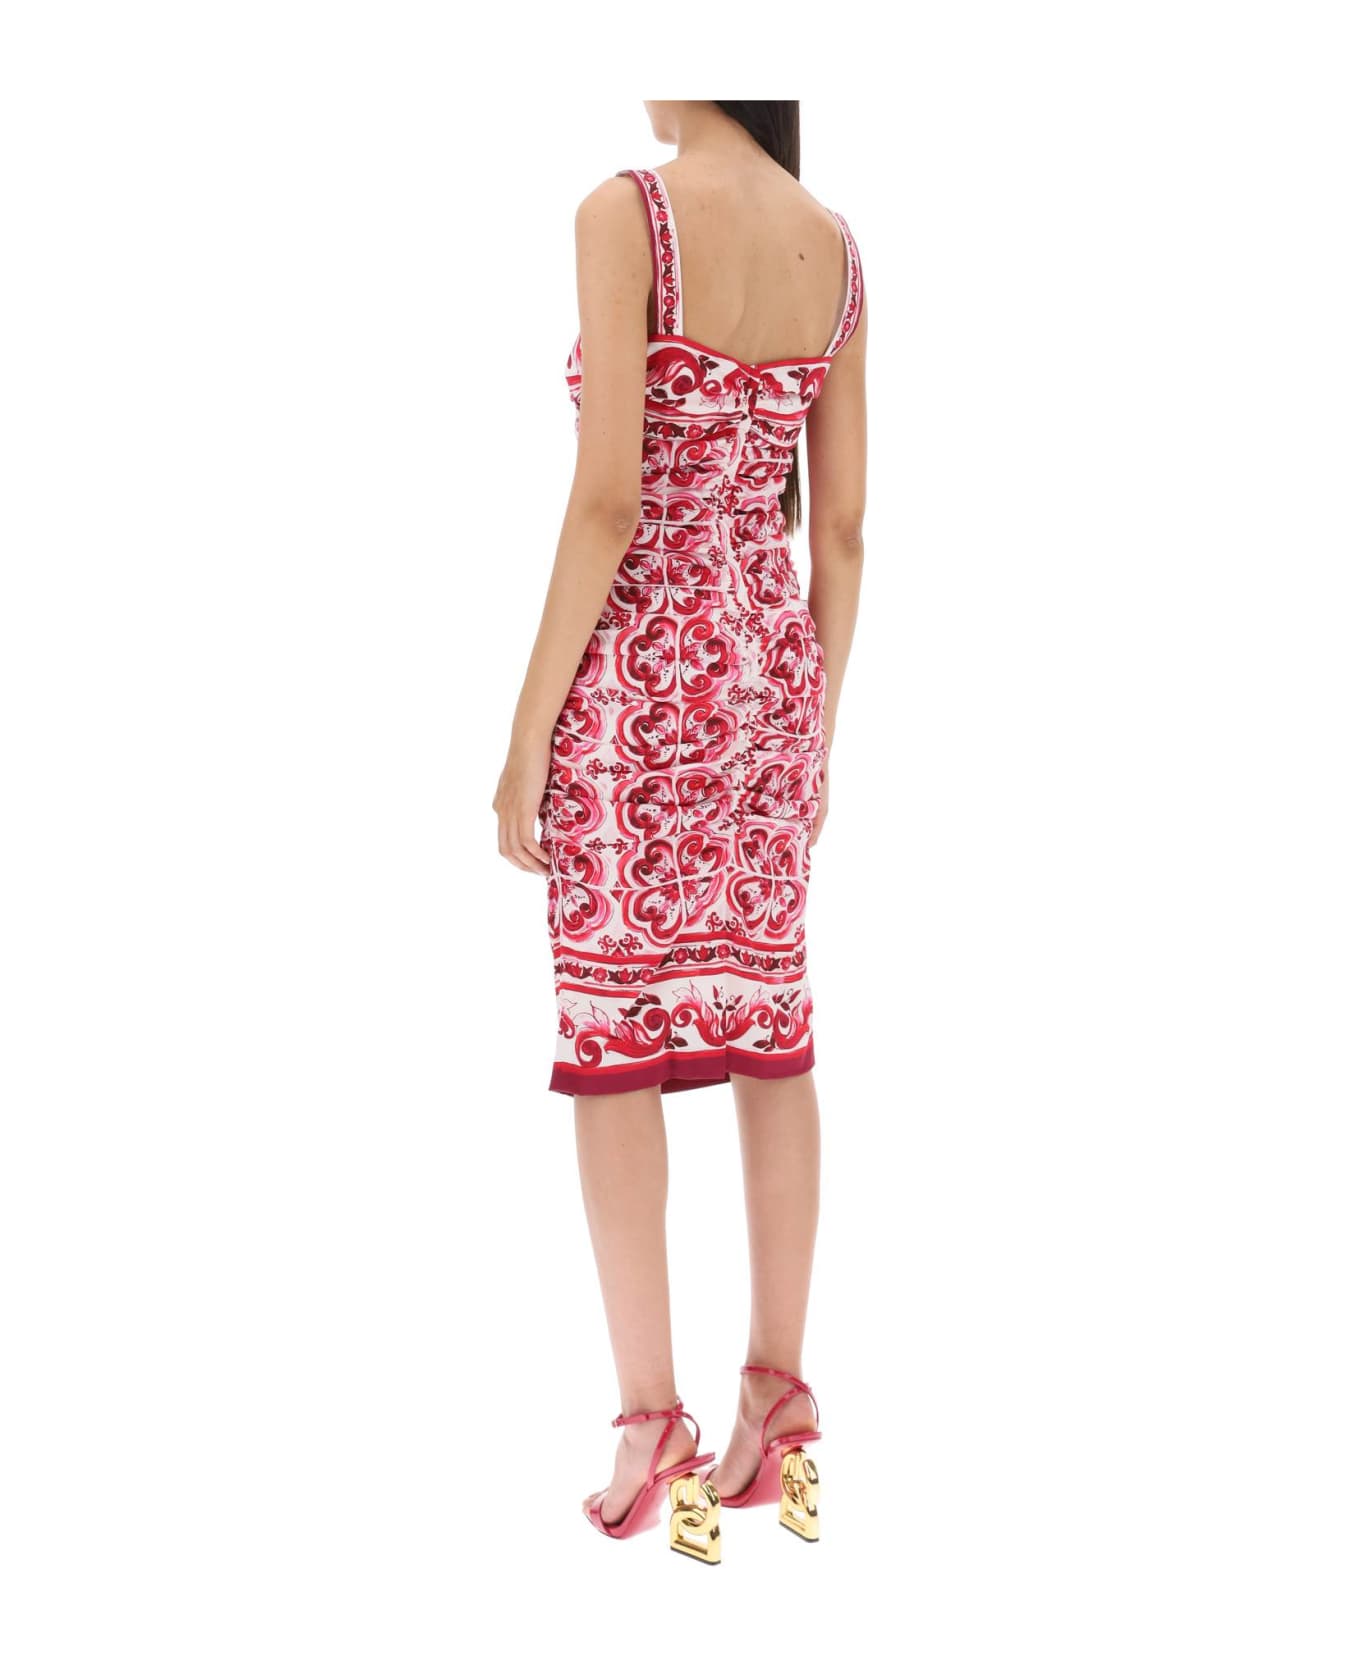 Dolce & Gabbana Majolica Print Silk Dress - Tris Maioliche Fuxia